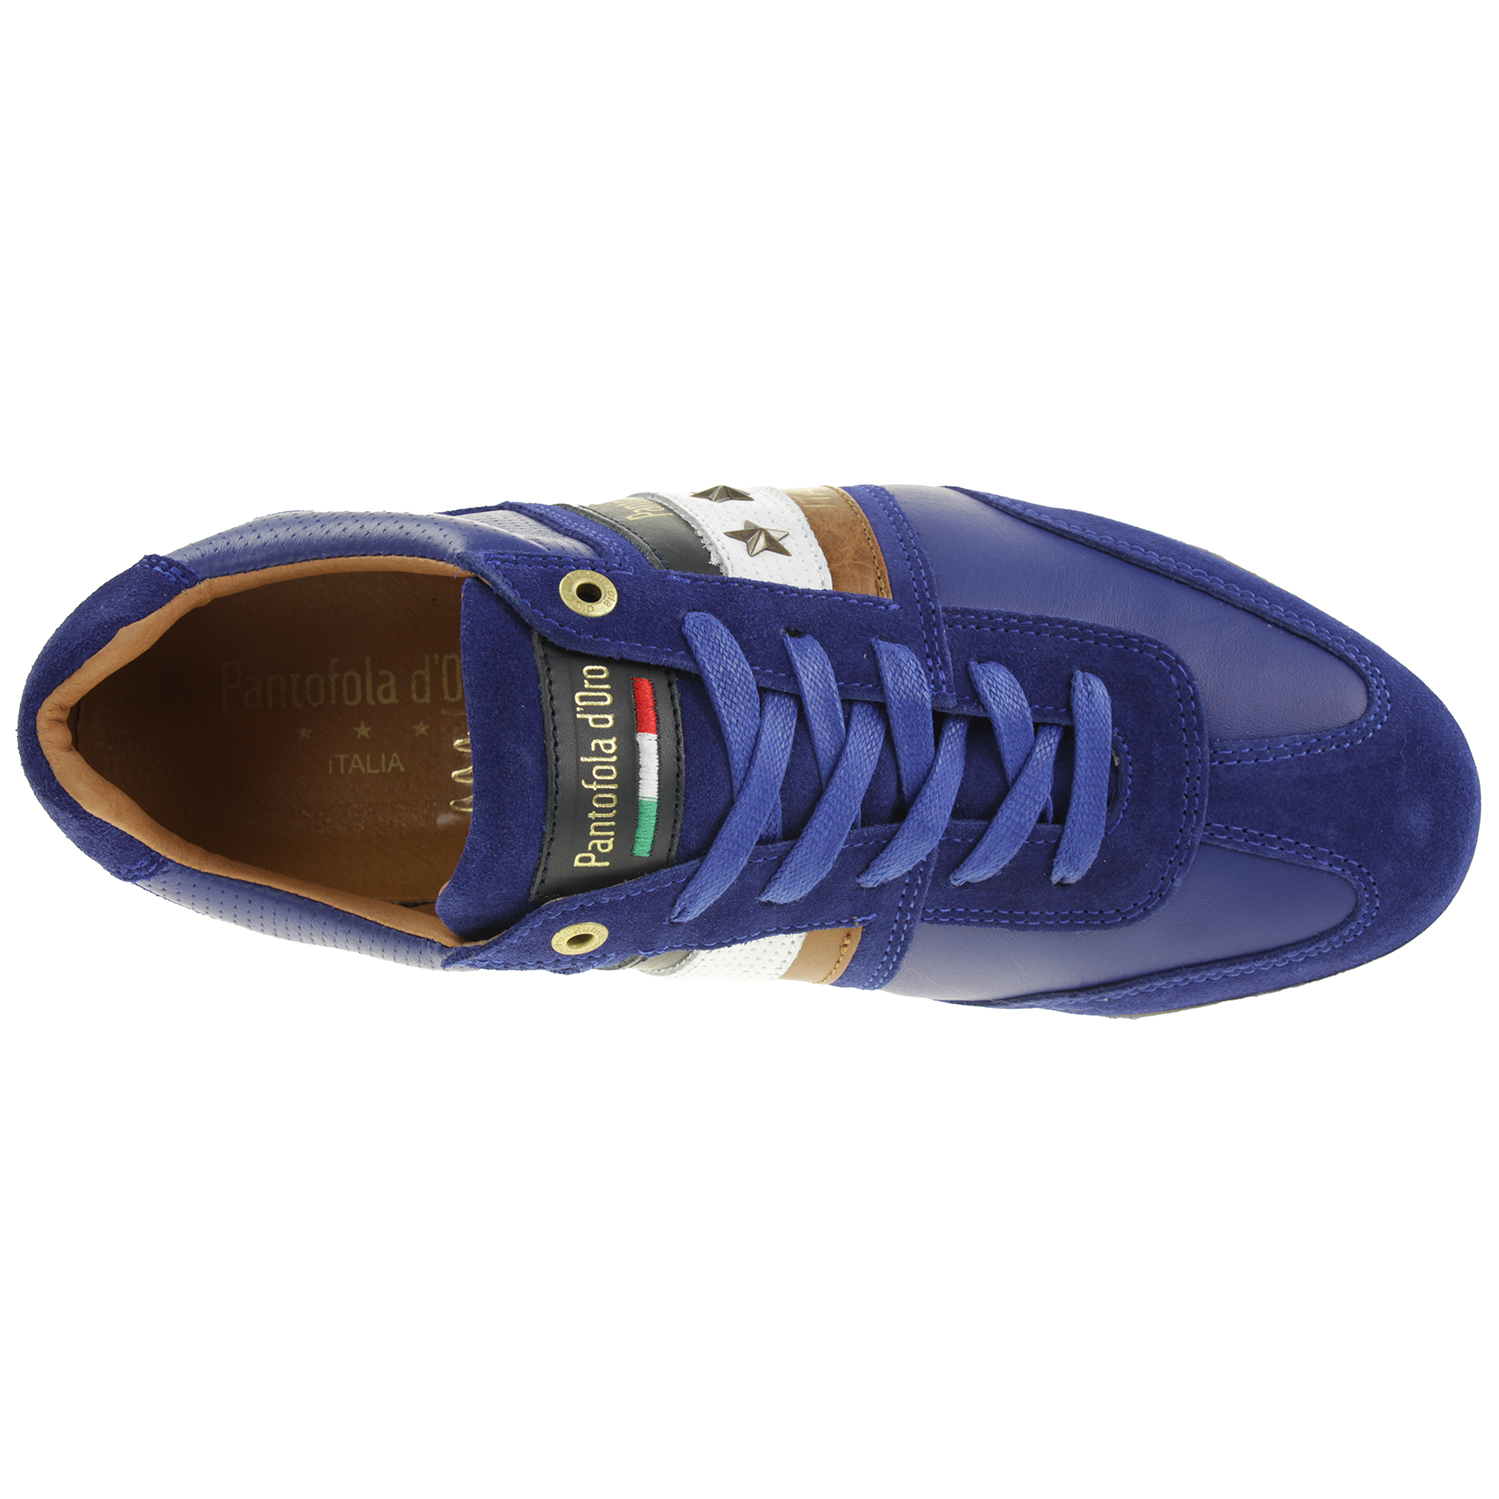 Pantofola d' Oro IMOLA COLORE UOMO LOW Herren Leder Sneaker 10213040 Blau 